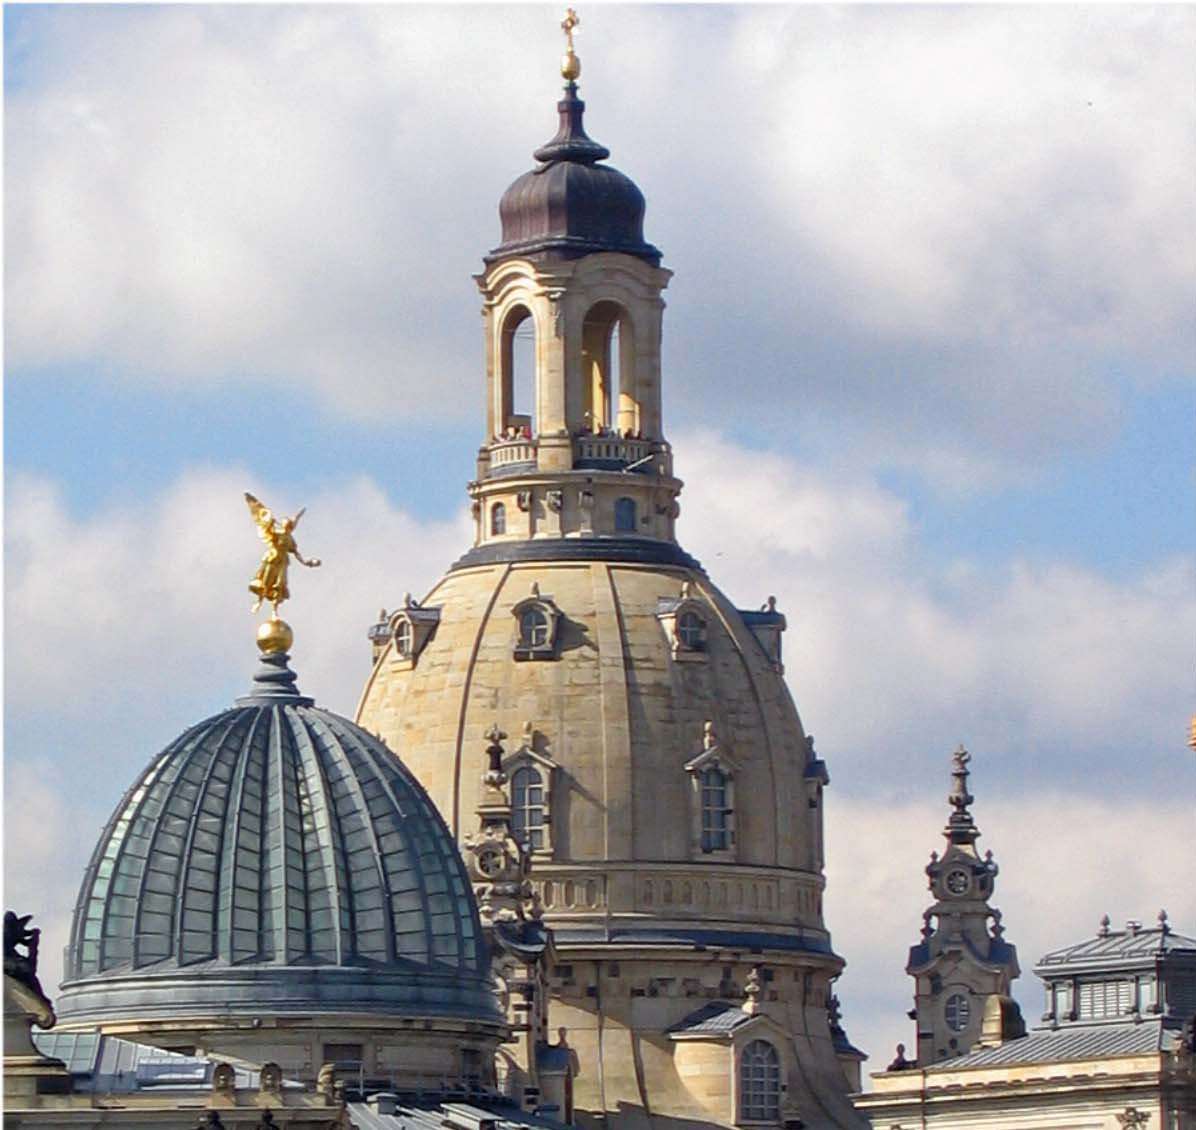 Dresda - Biserica puzzle online